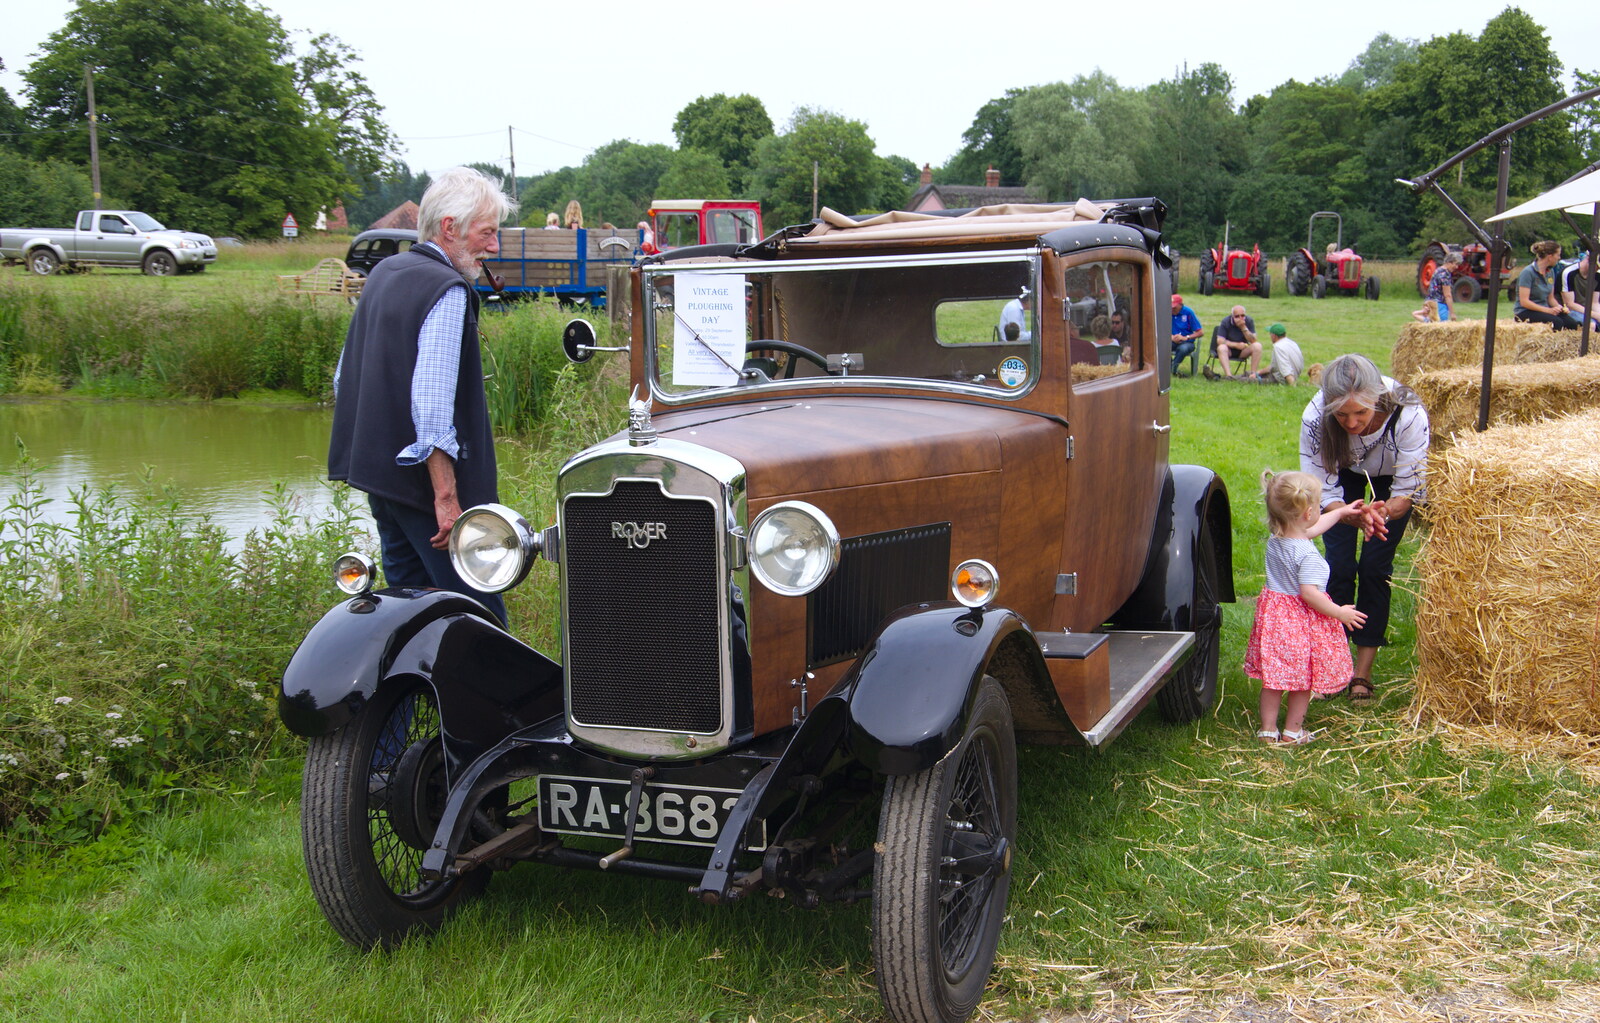 An old Rover 10 from A Hog Roast on Little Green, Thrandeston, Suffolk - 23rd June 2019